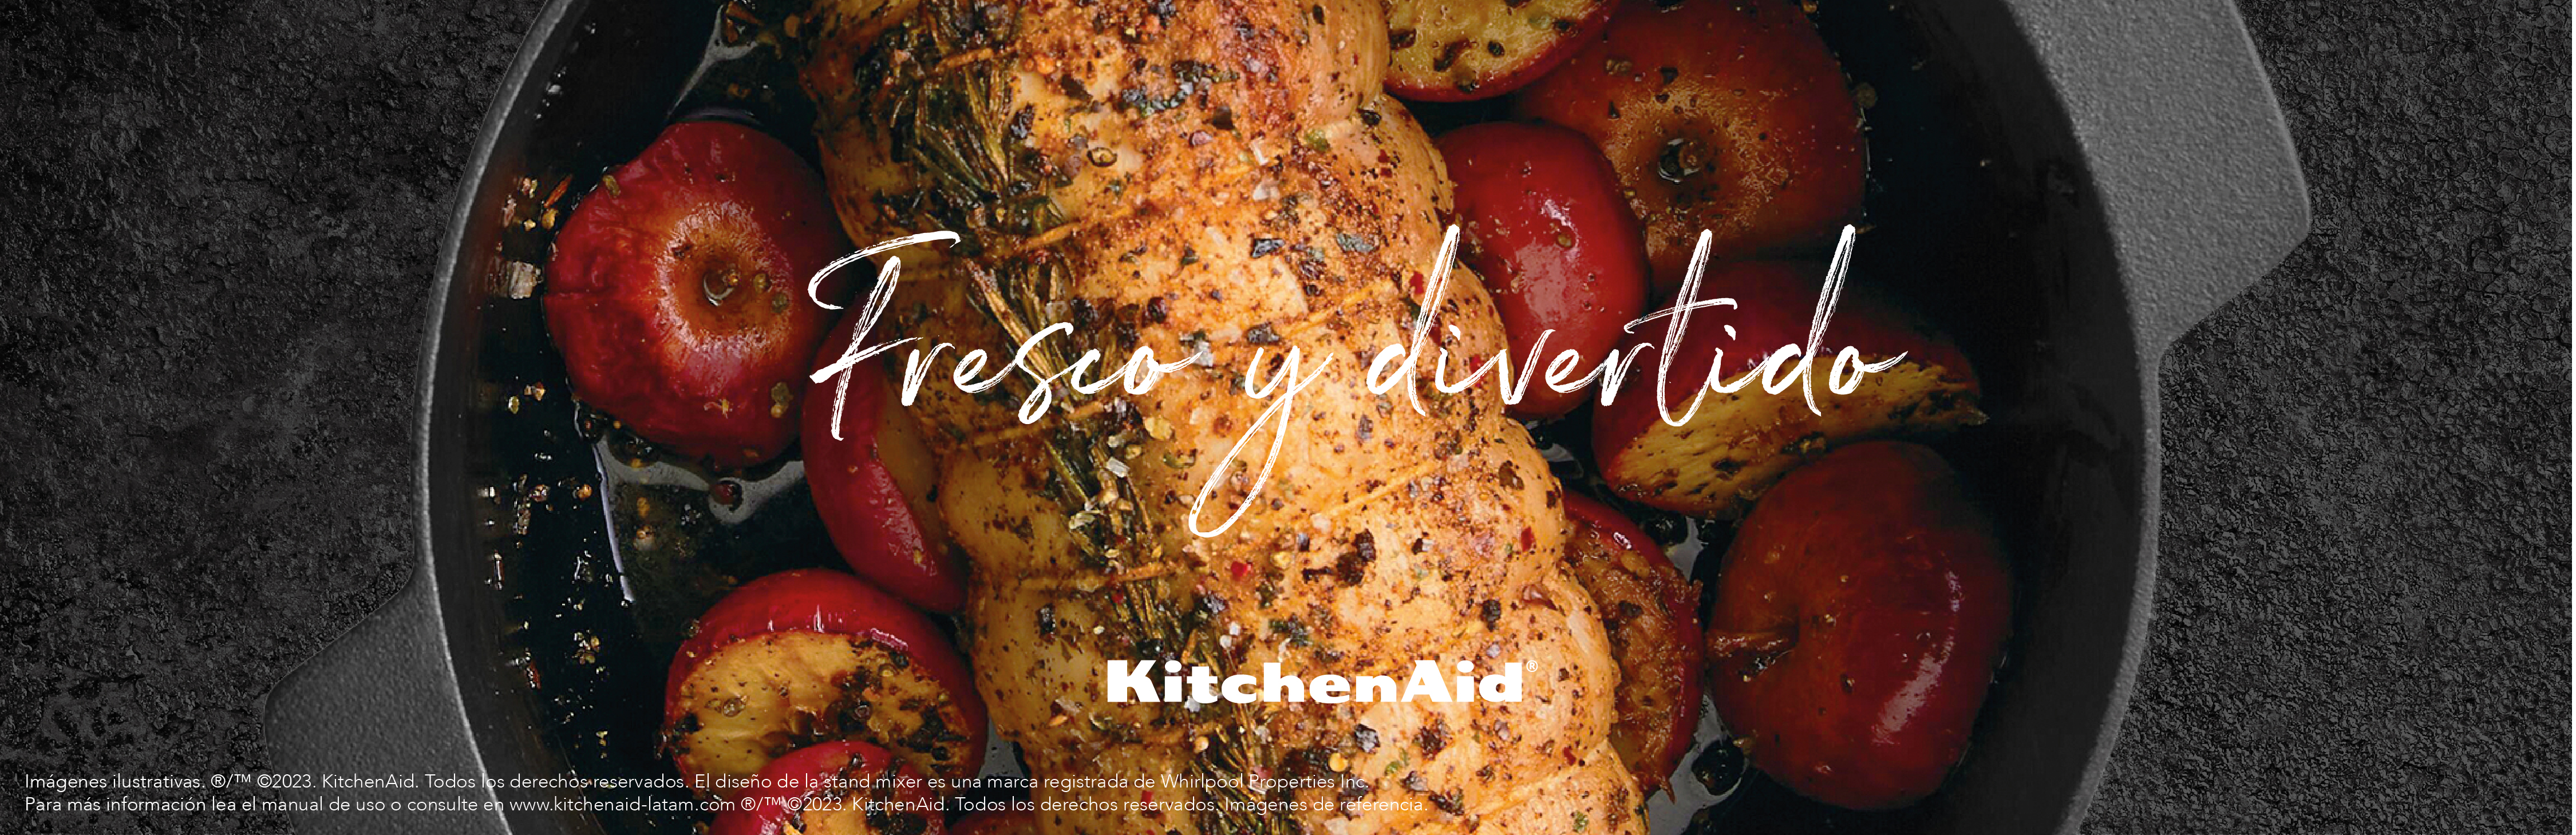 Banner de cierre KitchenAid®